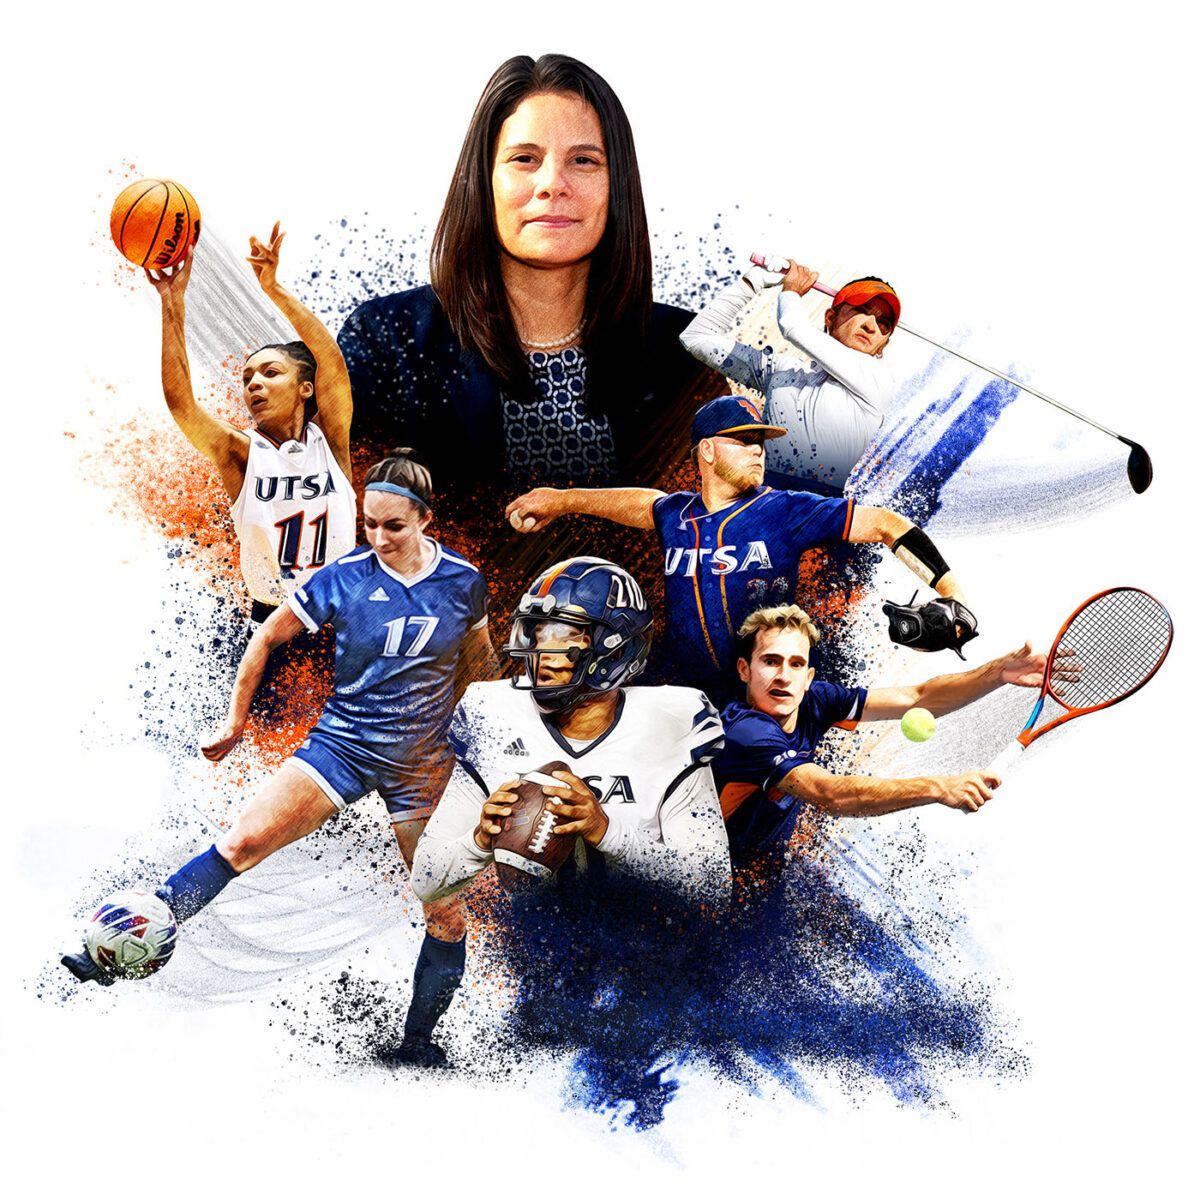 An illustration featuring Lisa Campos and six UTSA student-athletes